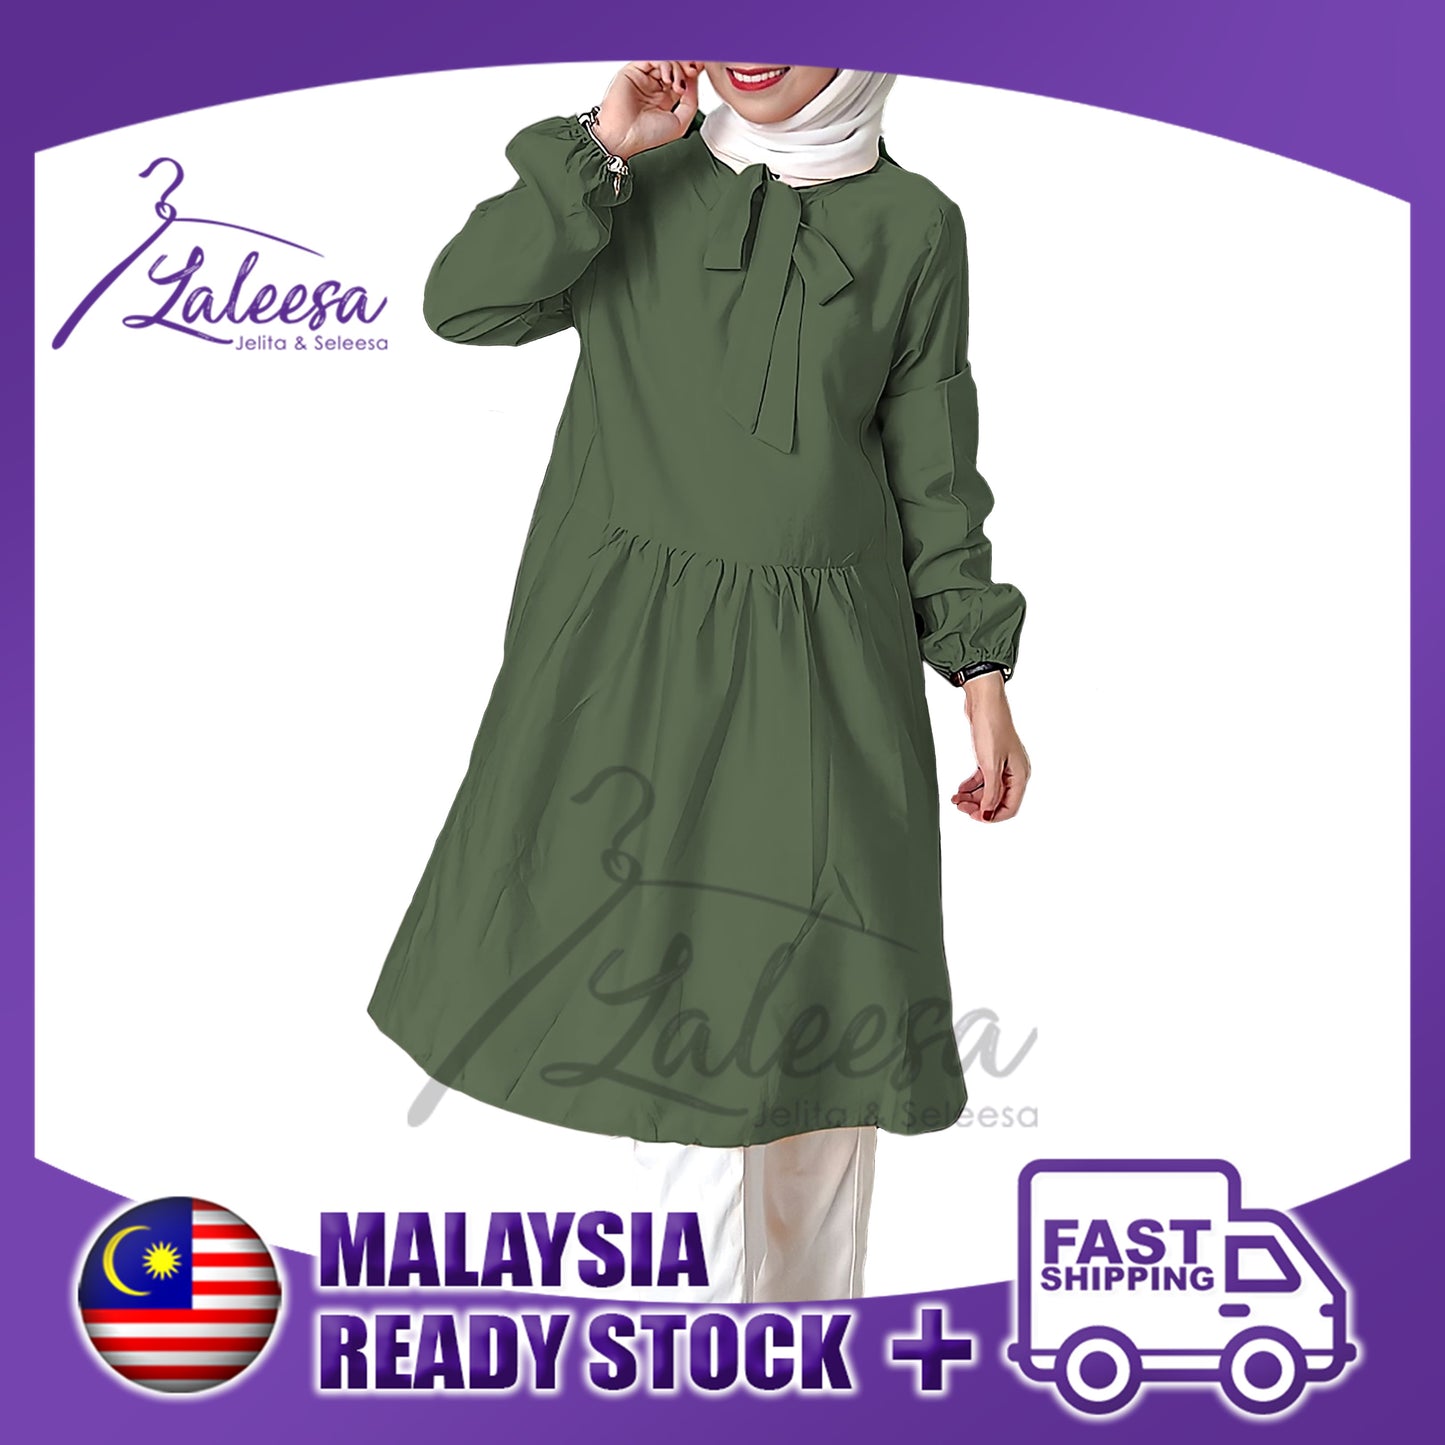 LALEESA TB441451 BLOUSE NABEEHA Plain Color Tie Collar Blouse Muslimah Blouse Women Blouse Baju Muslimah Baju Perempuan